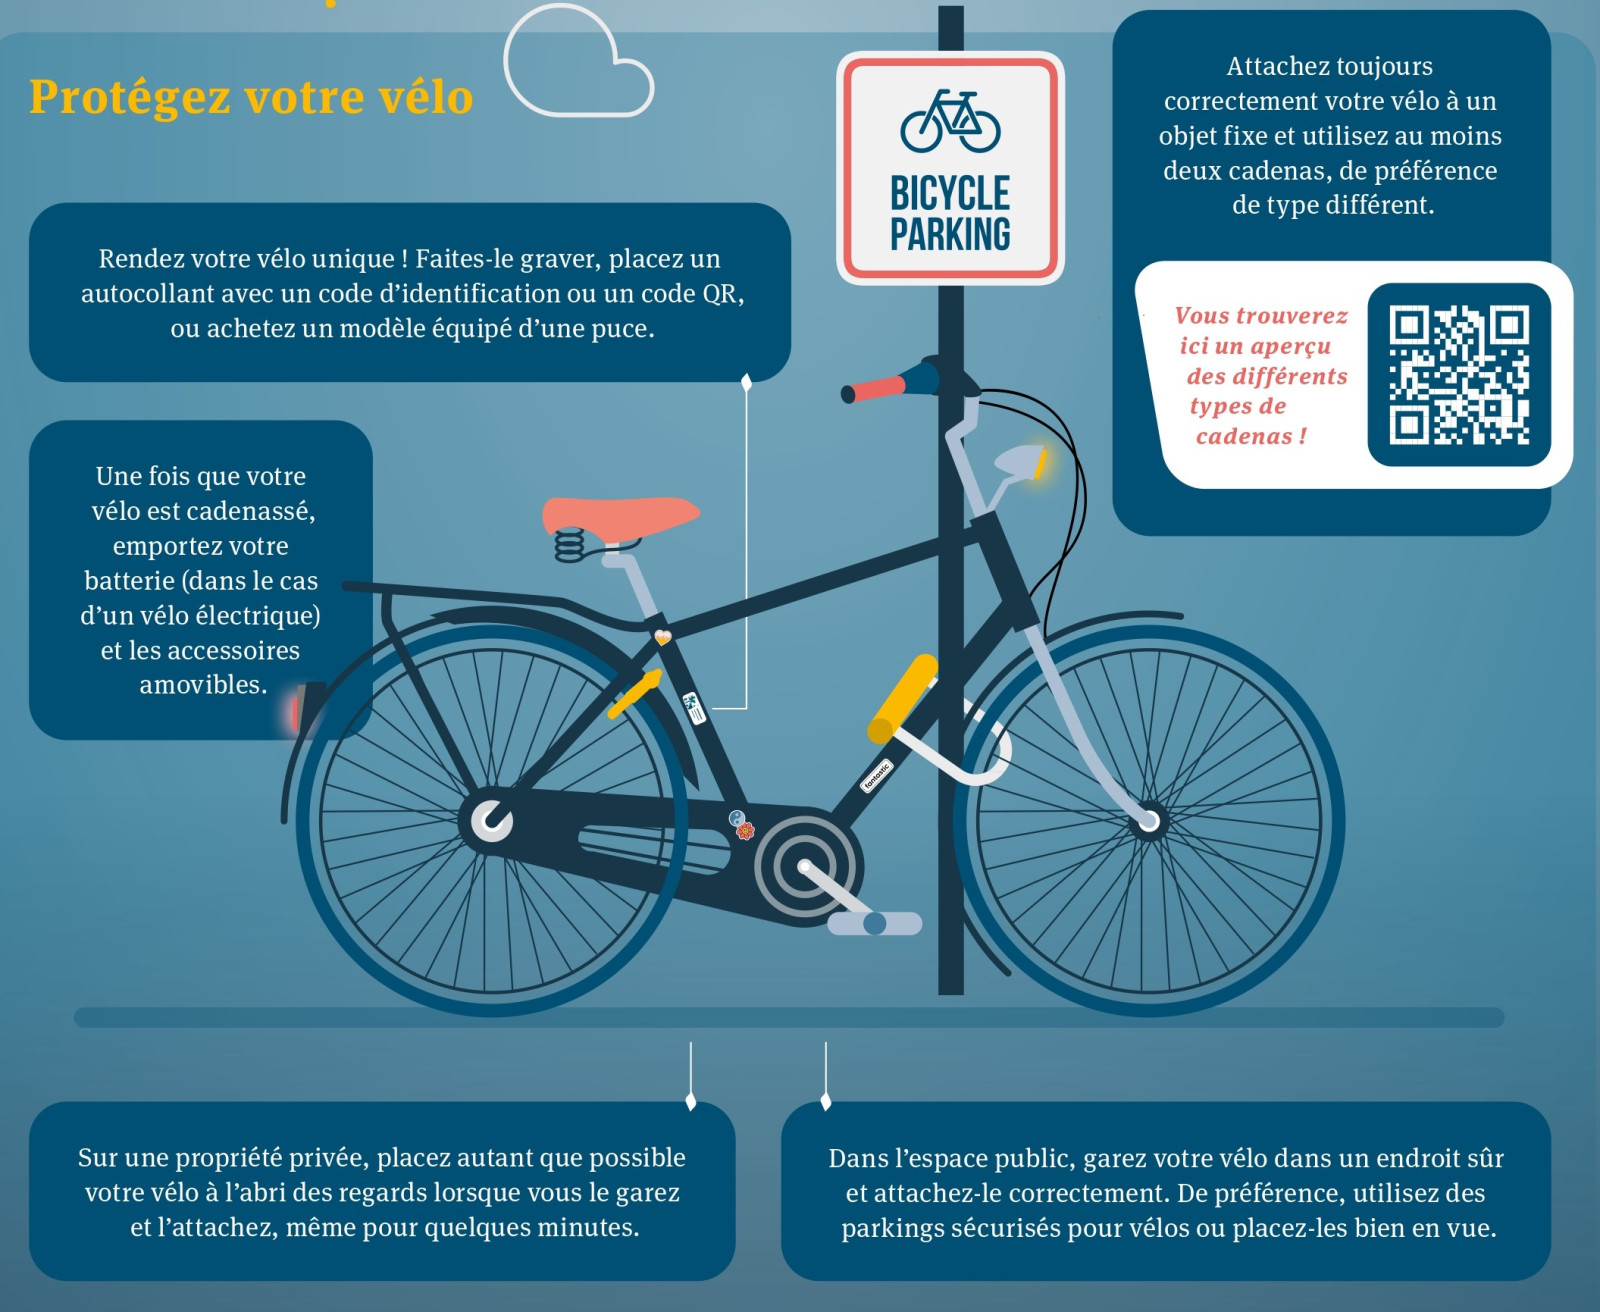 Moyens de protection contre le vol de vélos ( Besafe)